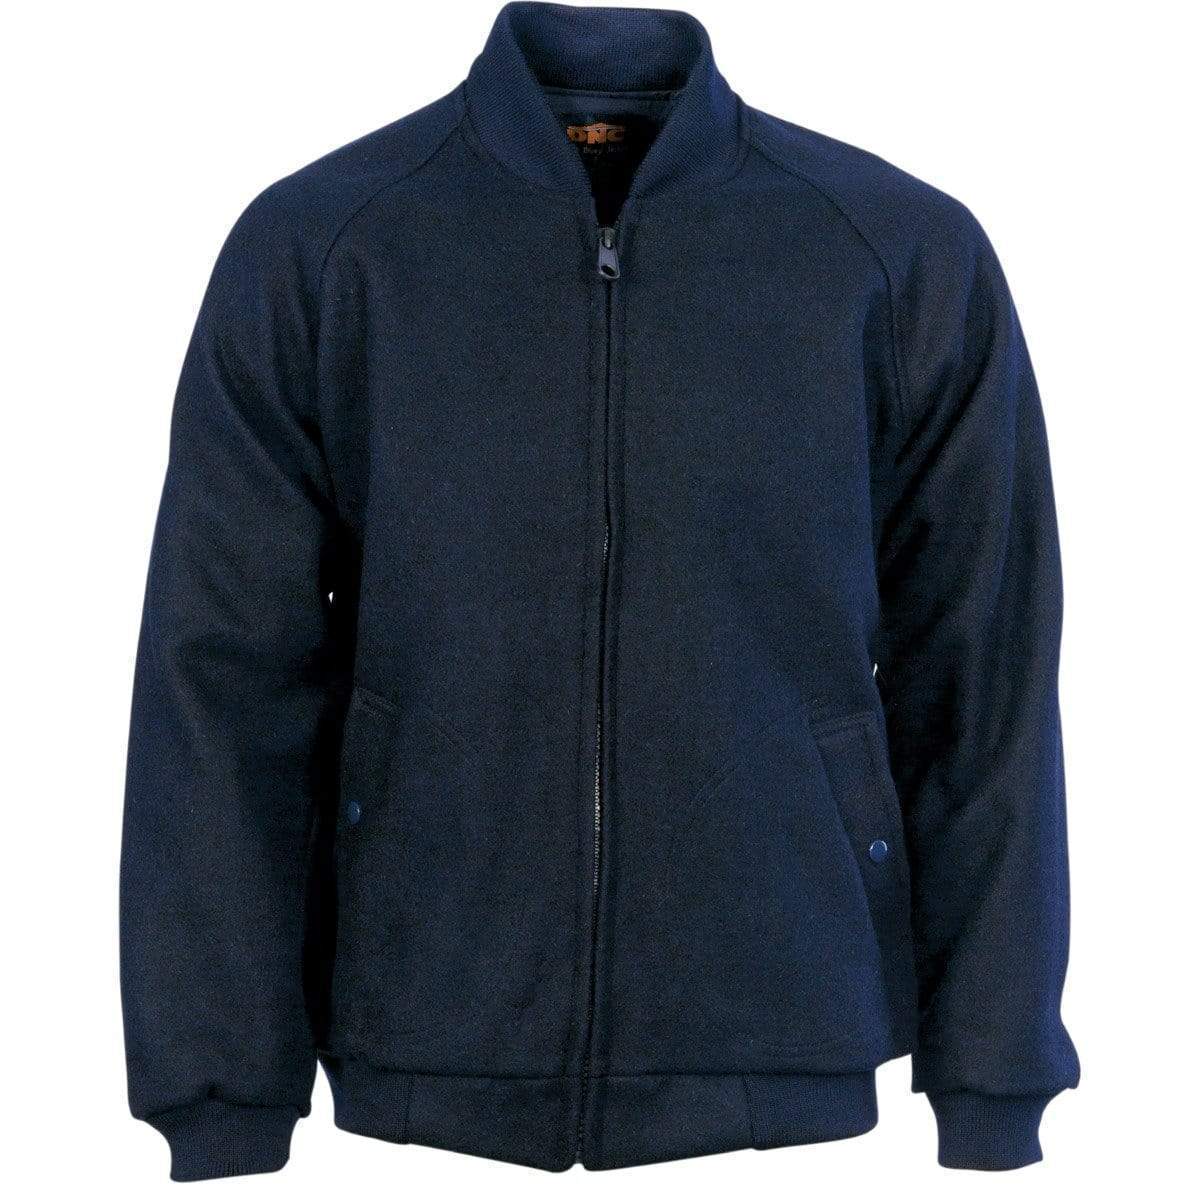 Dnc Workwear Bluey Jacket With Ribbing Collar & Cuffs - 3602 Corporate Wear DNC Workwear Navy S 